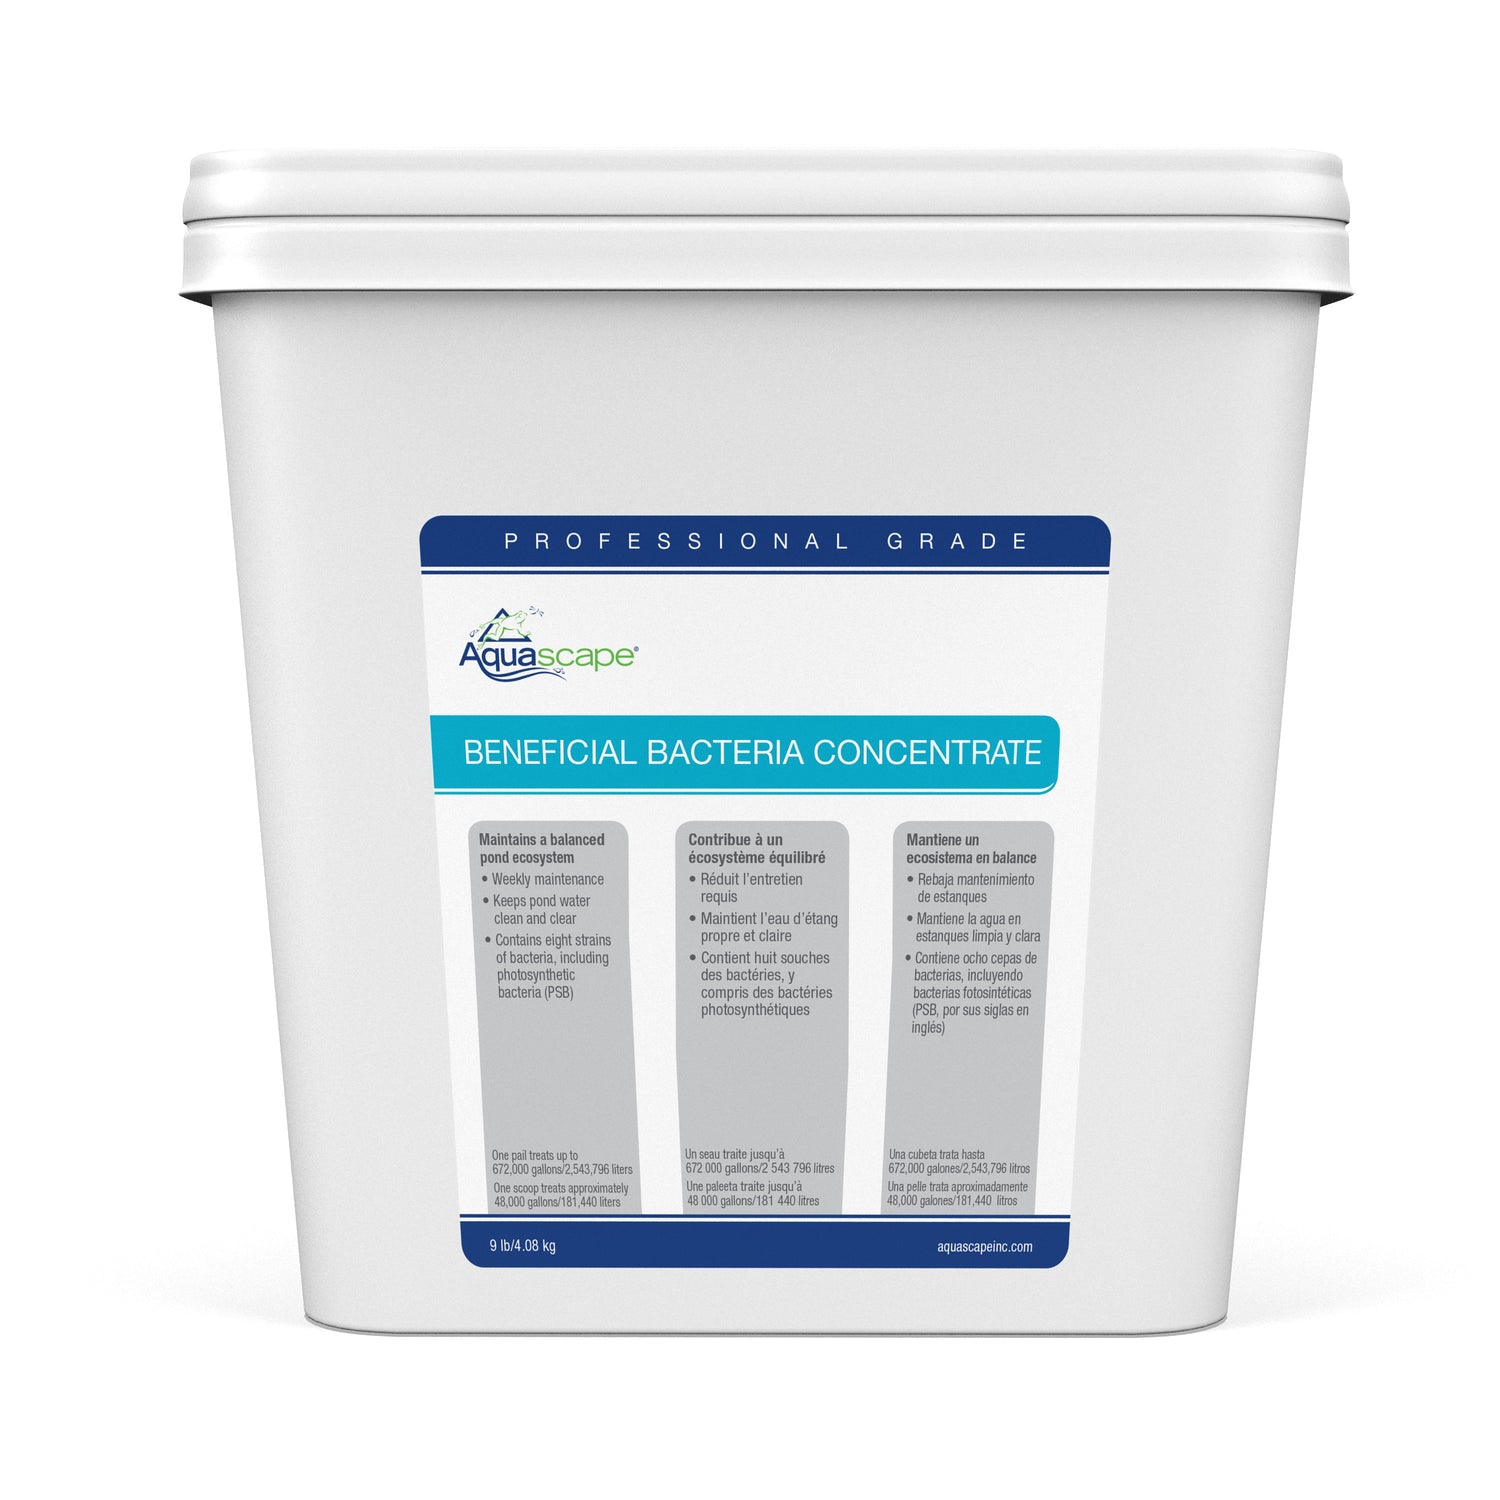 Beneficial Bacteria Concentrate Professional Grade - 9 lb / 4.08 kg